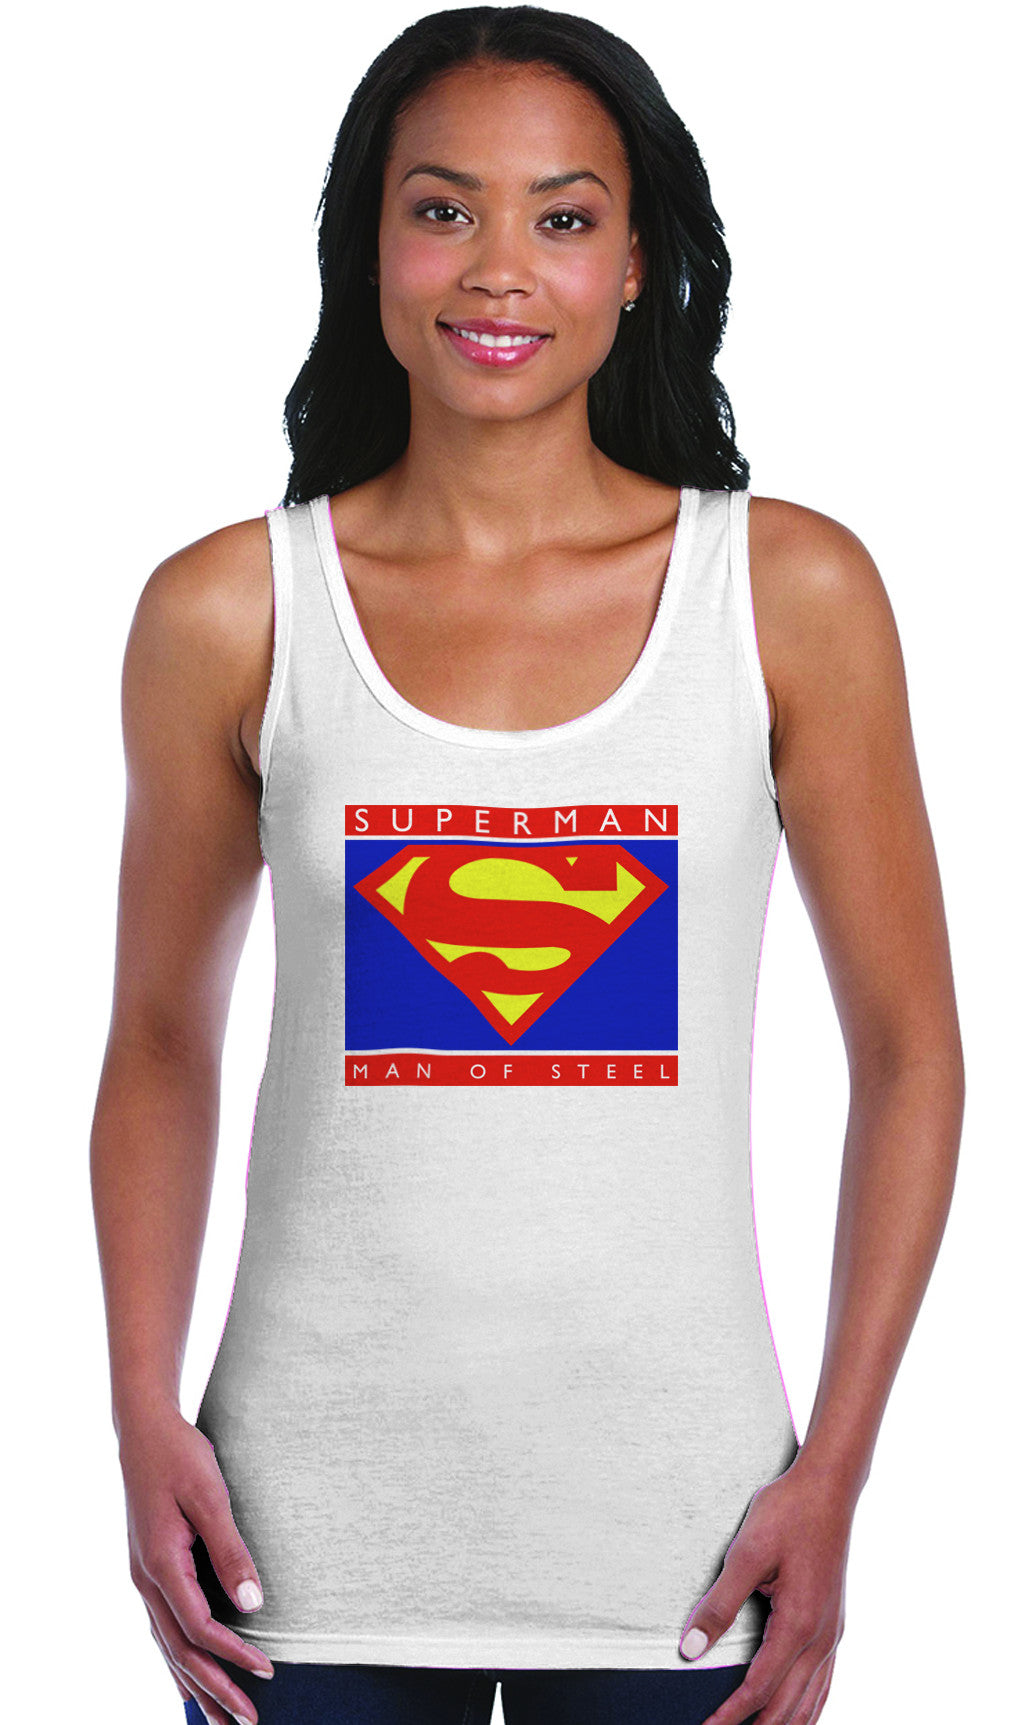 Superman Man Of Steel Standing Figure Logo on White Fitted Sheer Tank Top for Women - TshirtNow.net - 1